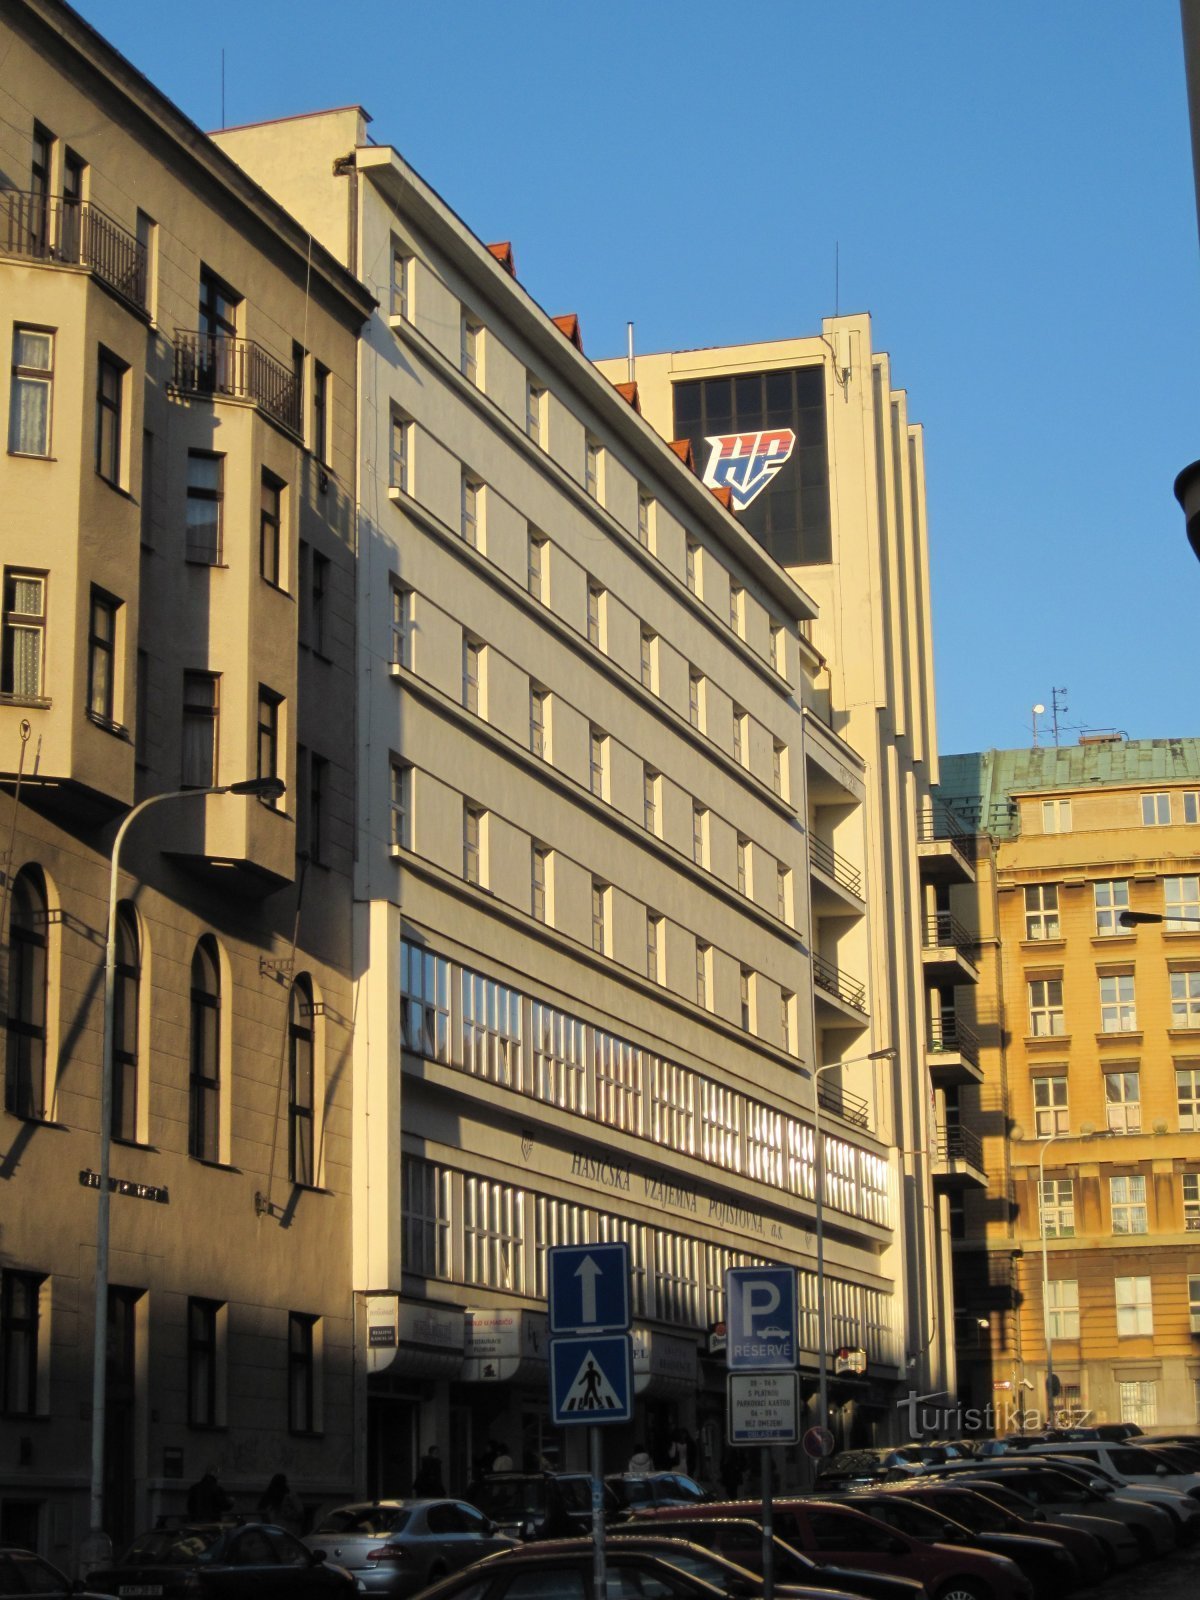 U Hasičů 剧院所在的 Hasičská 互助保险公司大楼